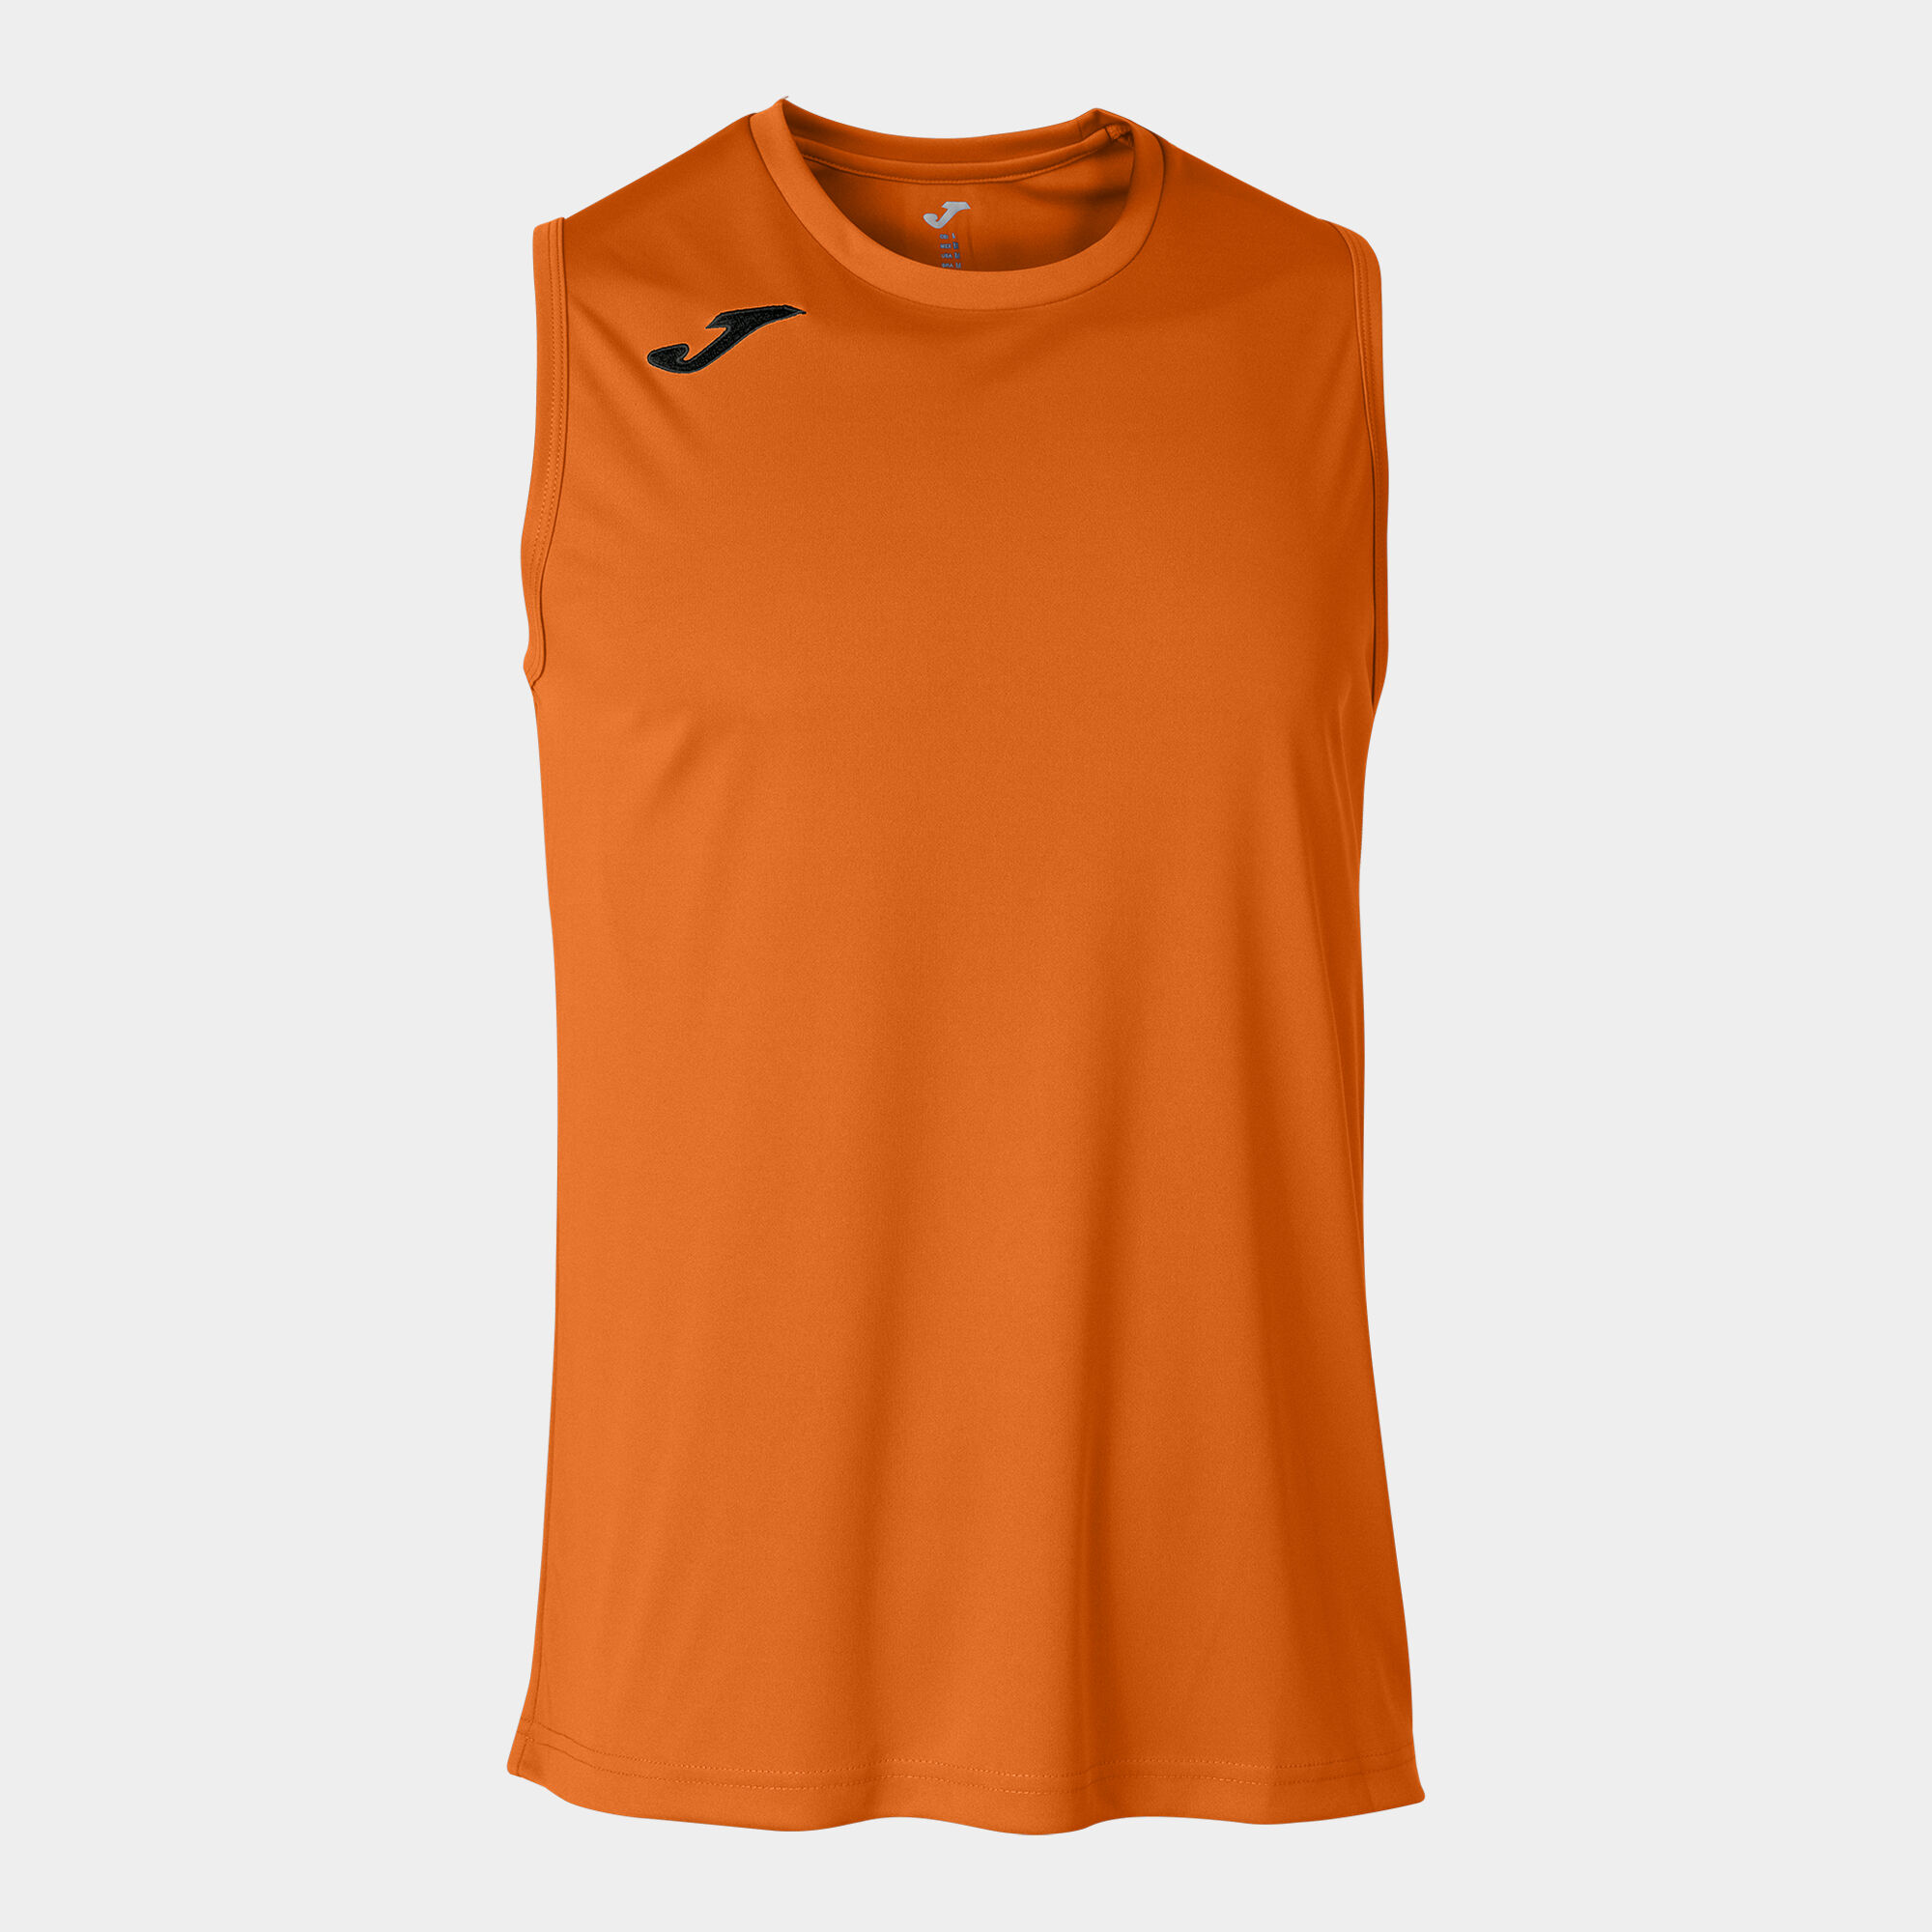 T-shirt de alça homem Combi Basket laranja